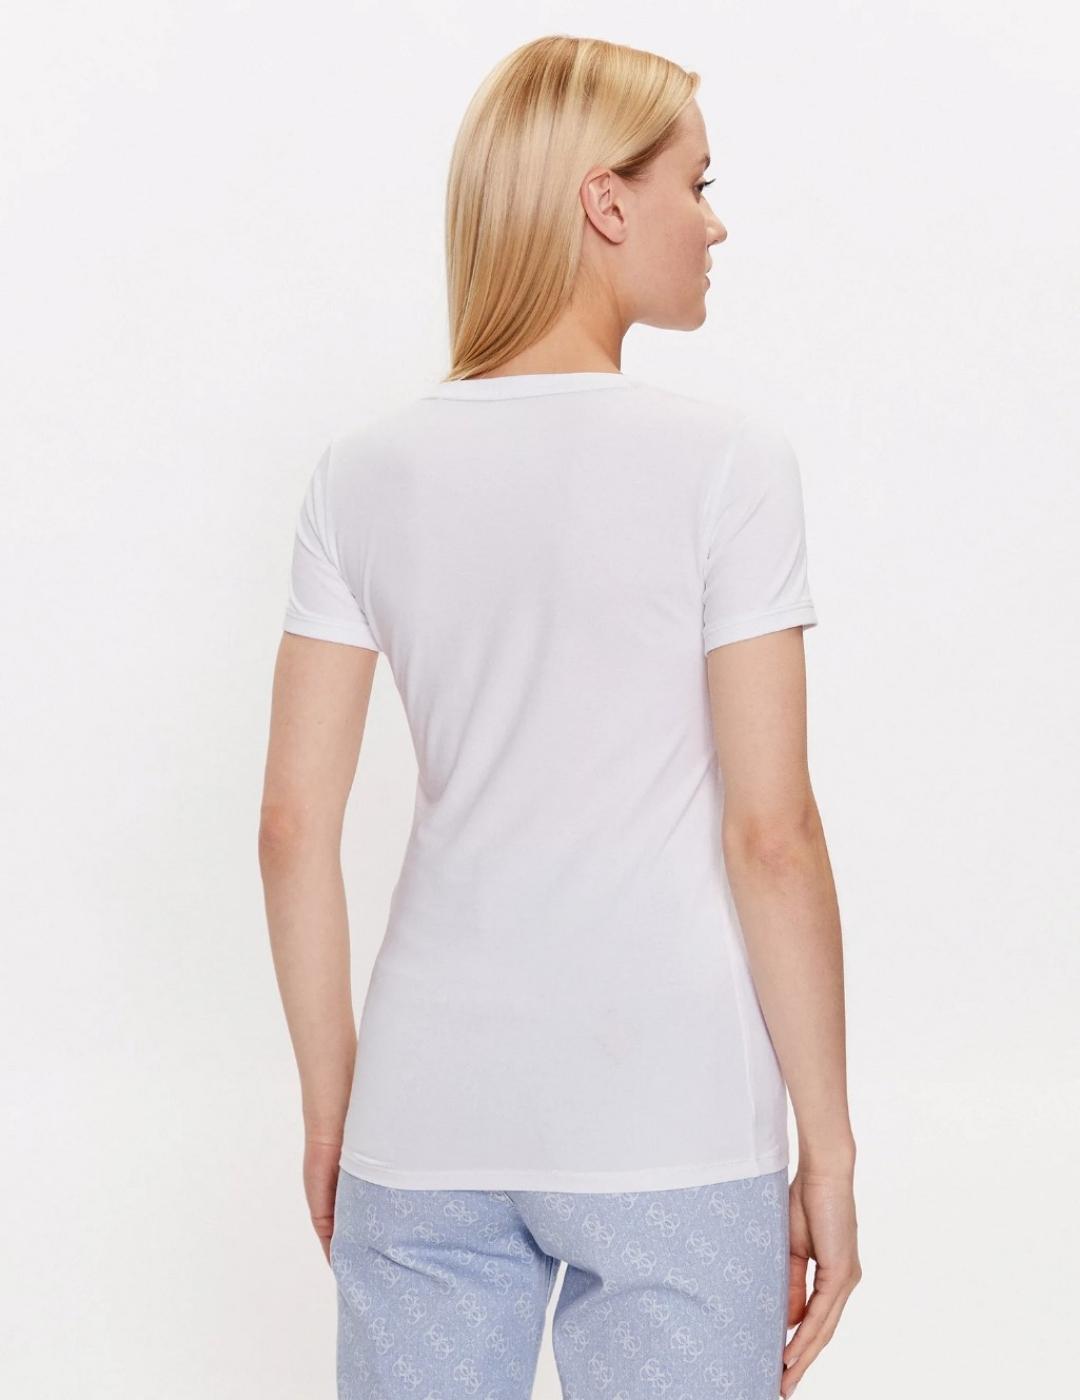 Camiseta Guess mini Triangle blanca para mujer